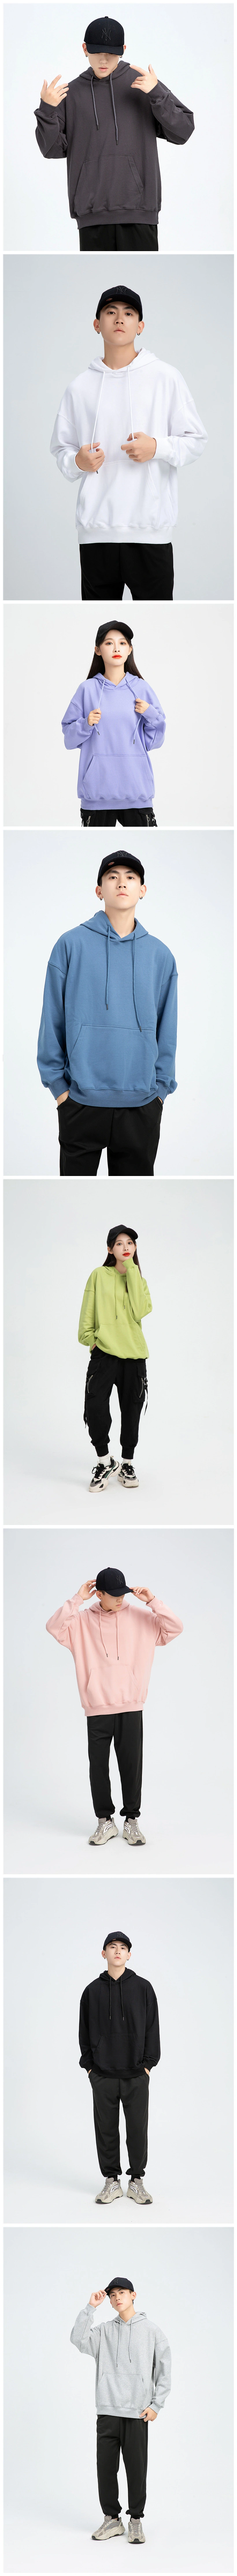 Oversized Hoodie Sweatshirts Wholesale Men′ S/Women′ S Autumn Casual Hoodies Pullover Sports Wear Stock Fitness Wear Clothing